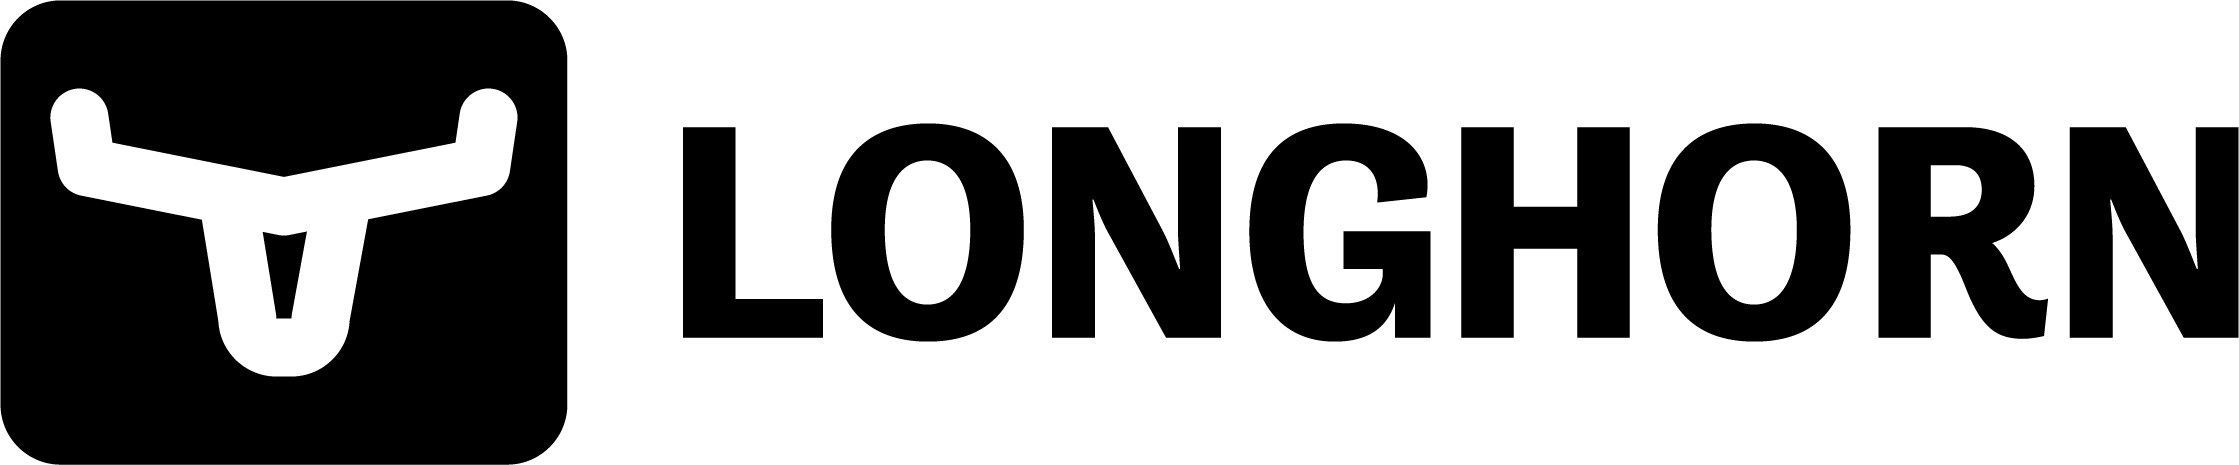 Longhorn footer logo